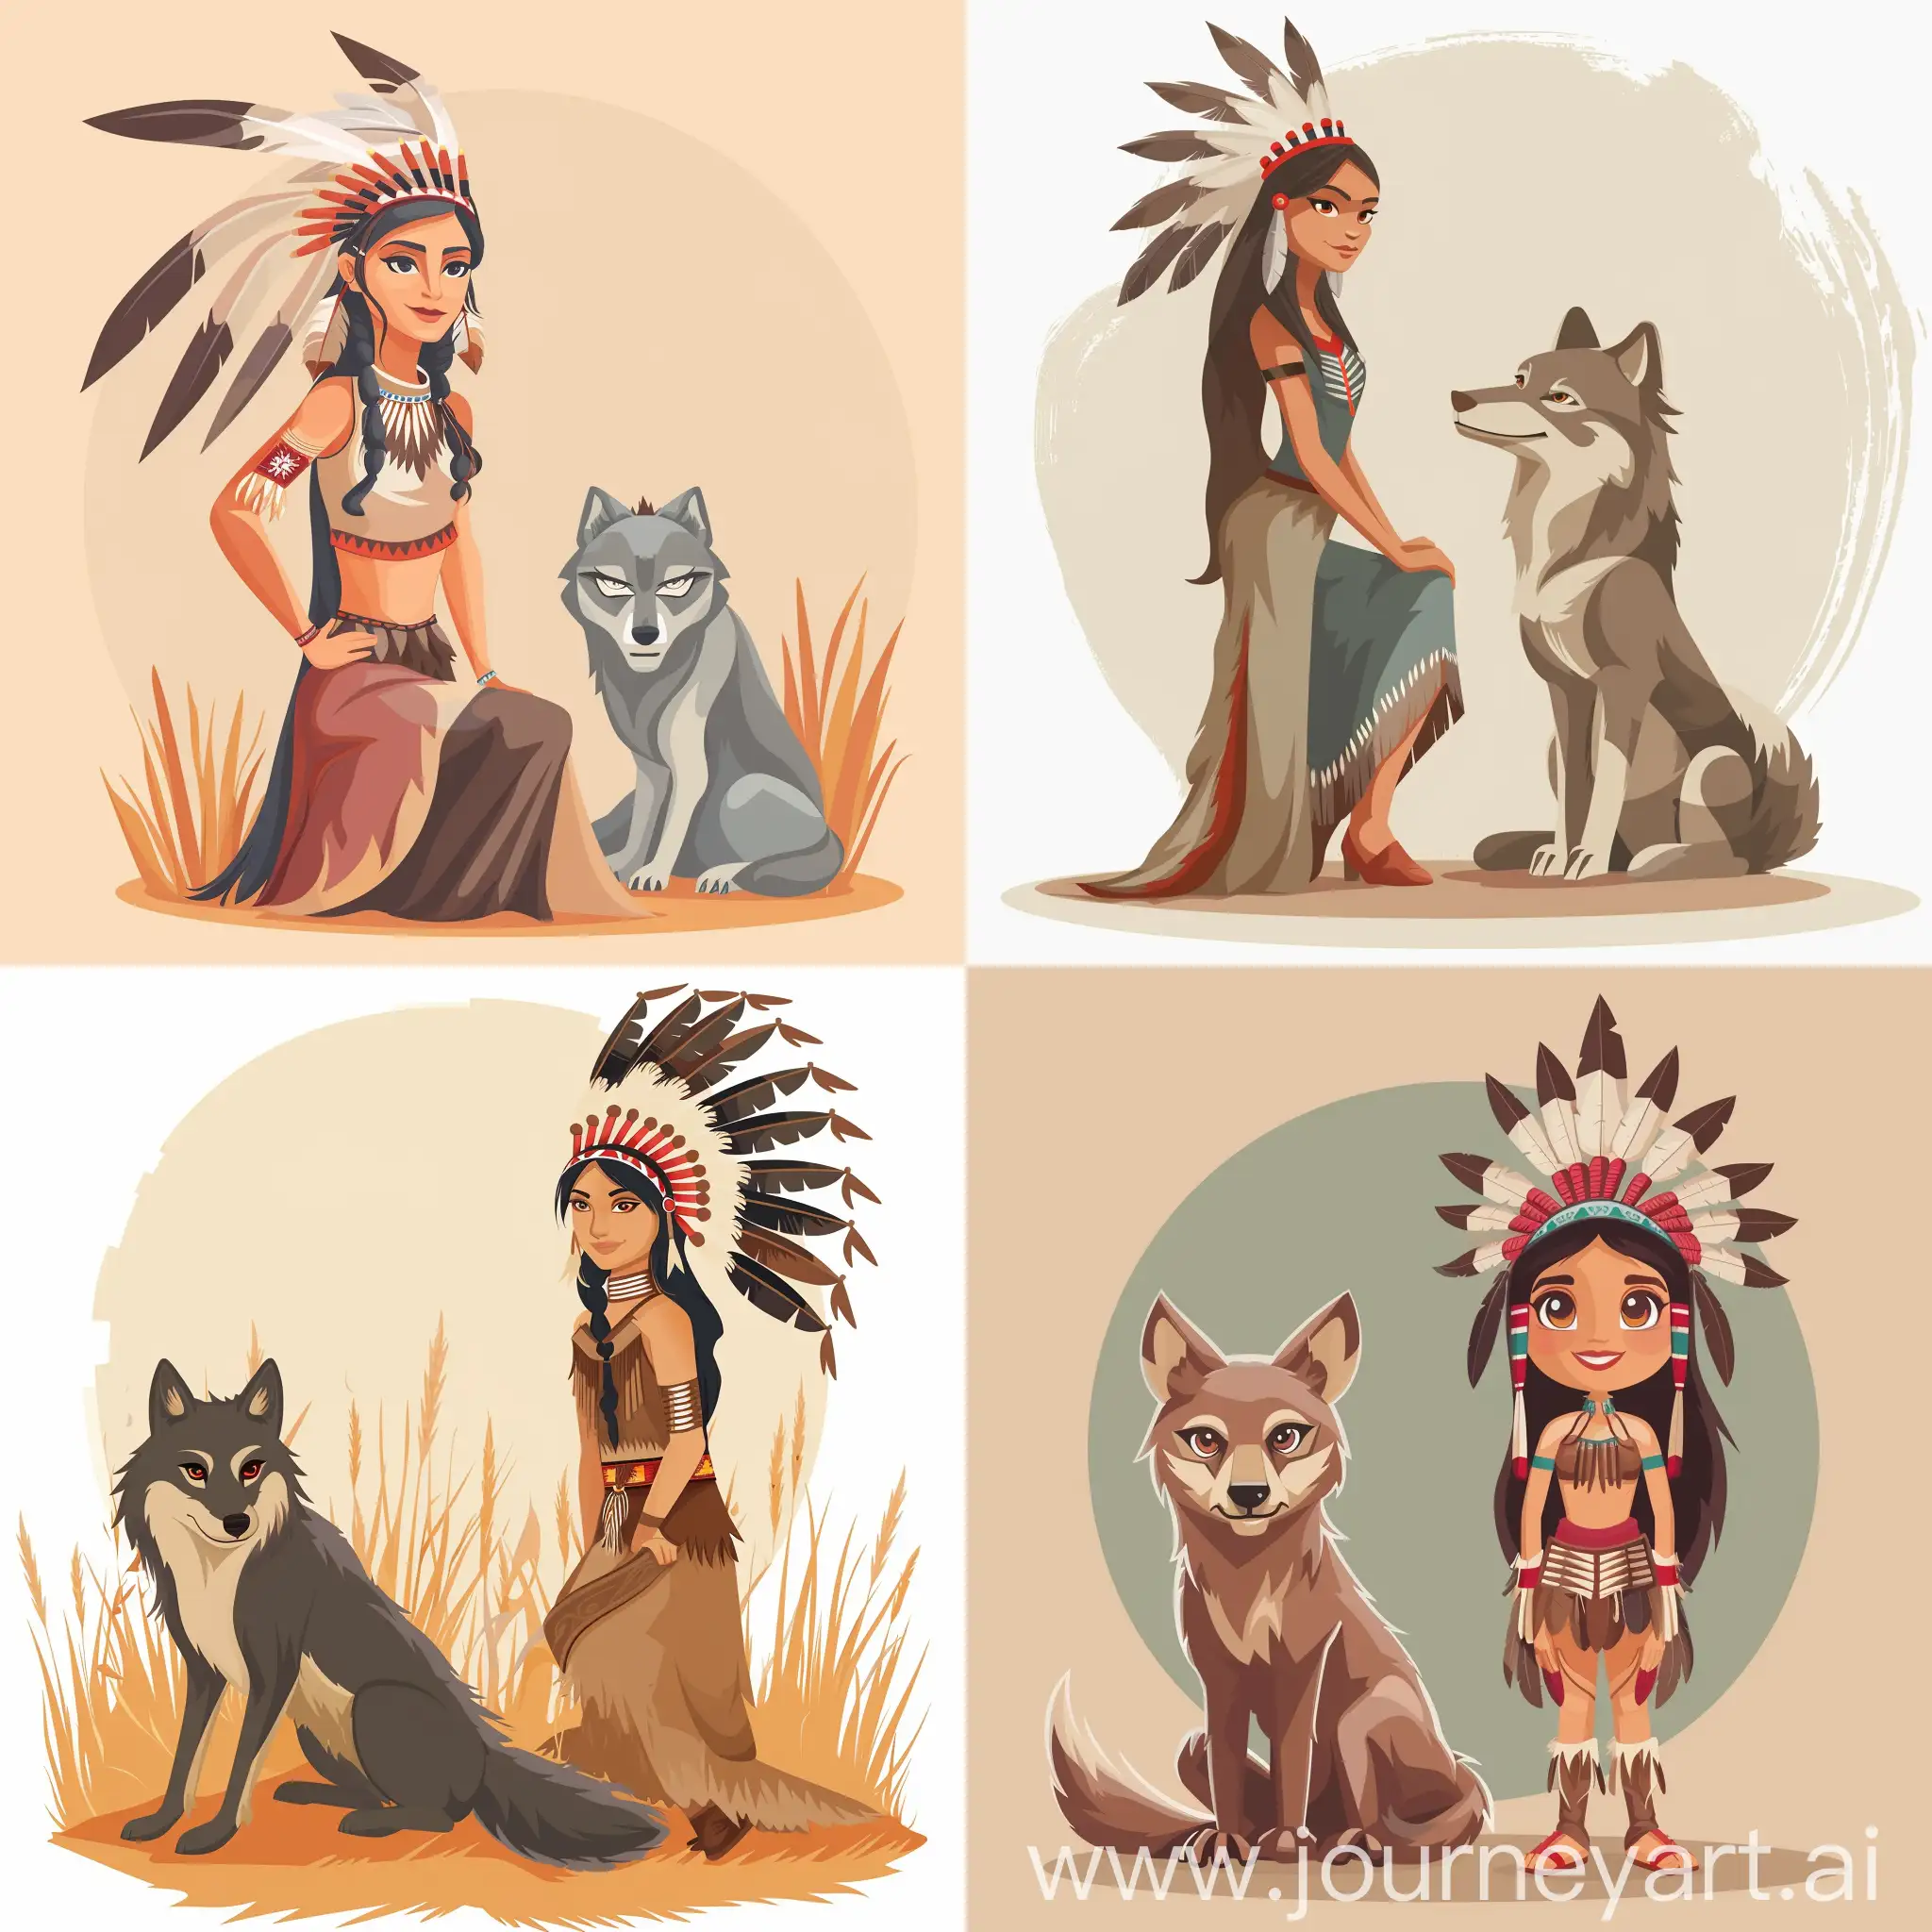 Native American woman with Native American headdress near sitting wolf, in cartoon flat style